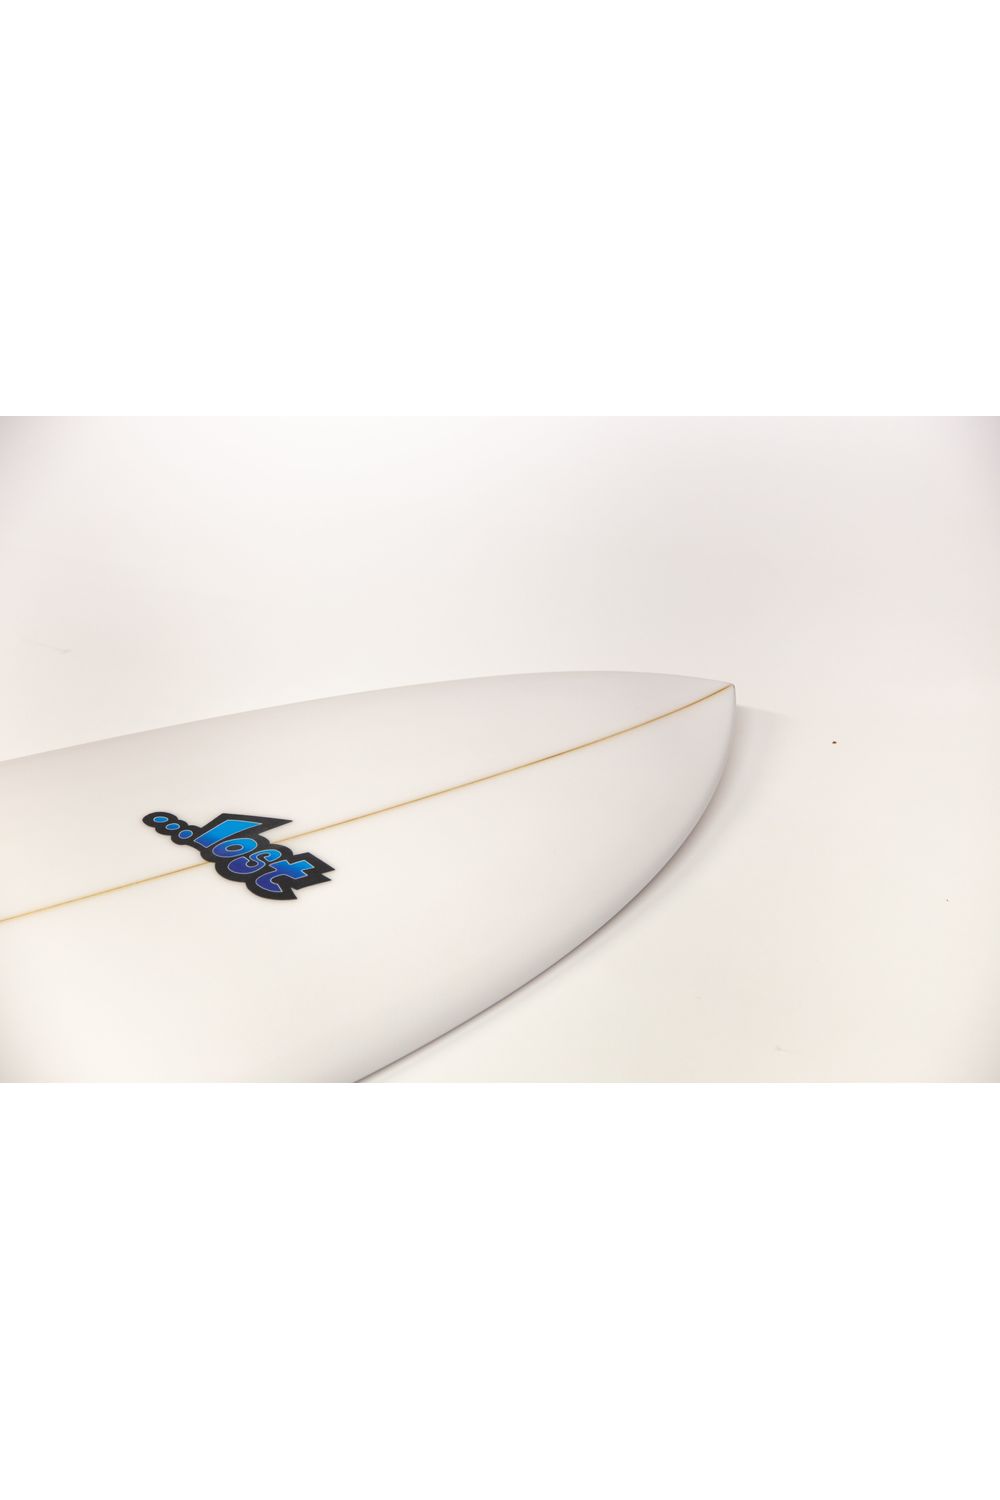 Lost Puddle Jumper, 6'0 Surfboard 42.00L PU Futures 5 Fins